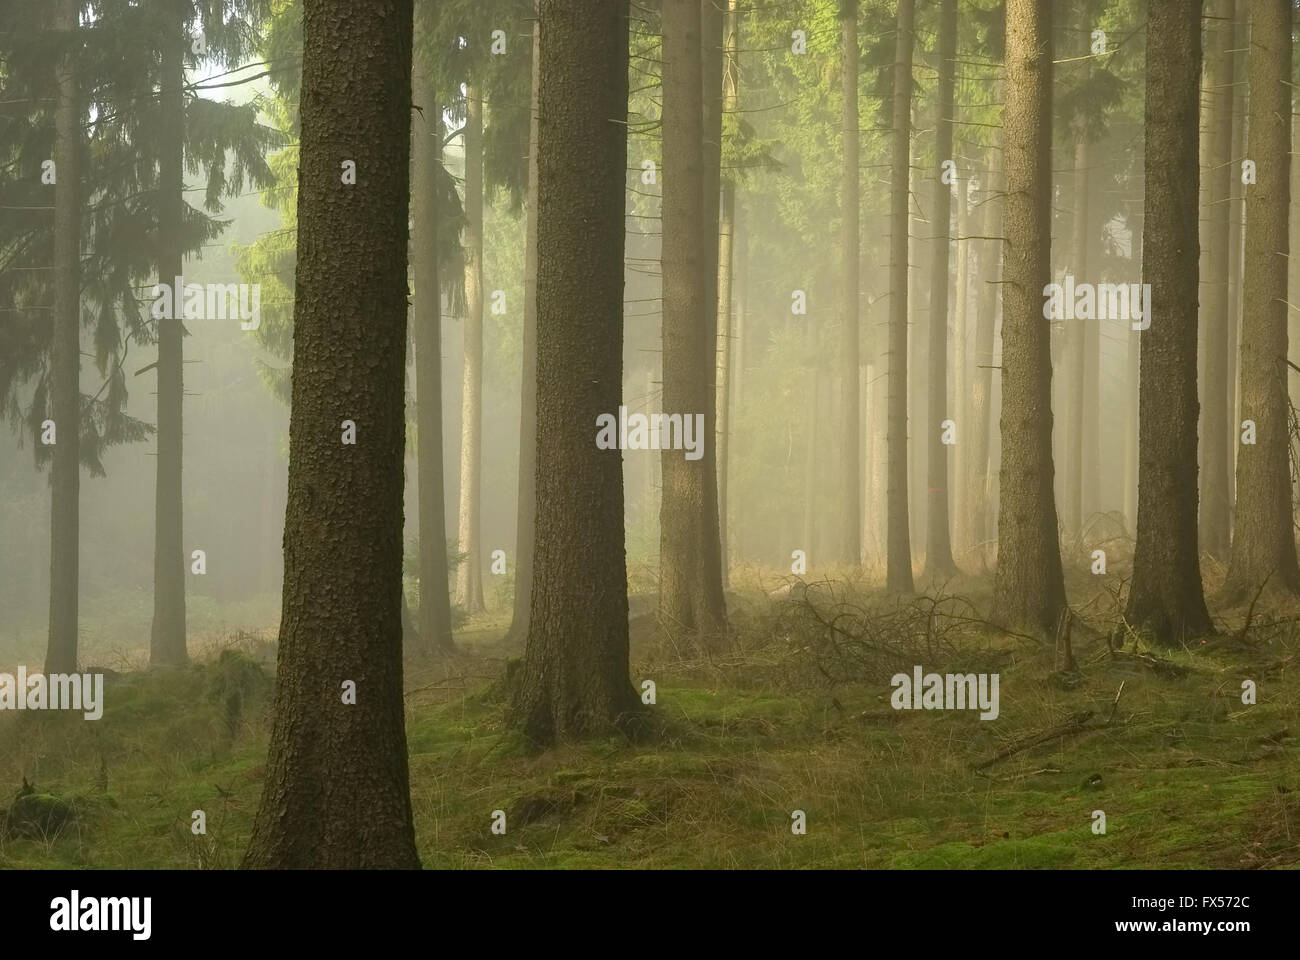 Wald im Nebel - forest in fog 02 Stock Photo